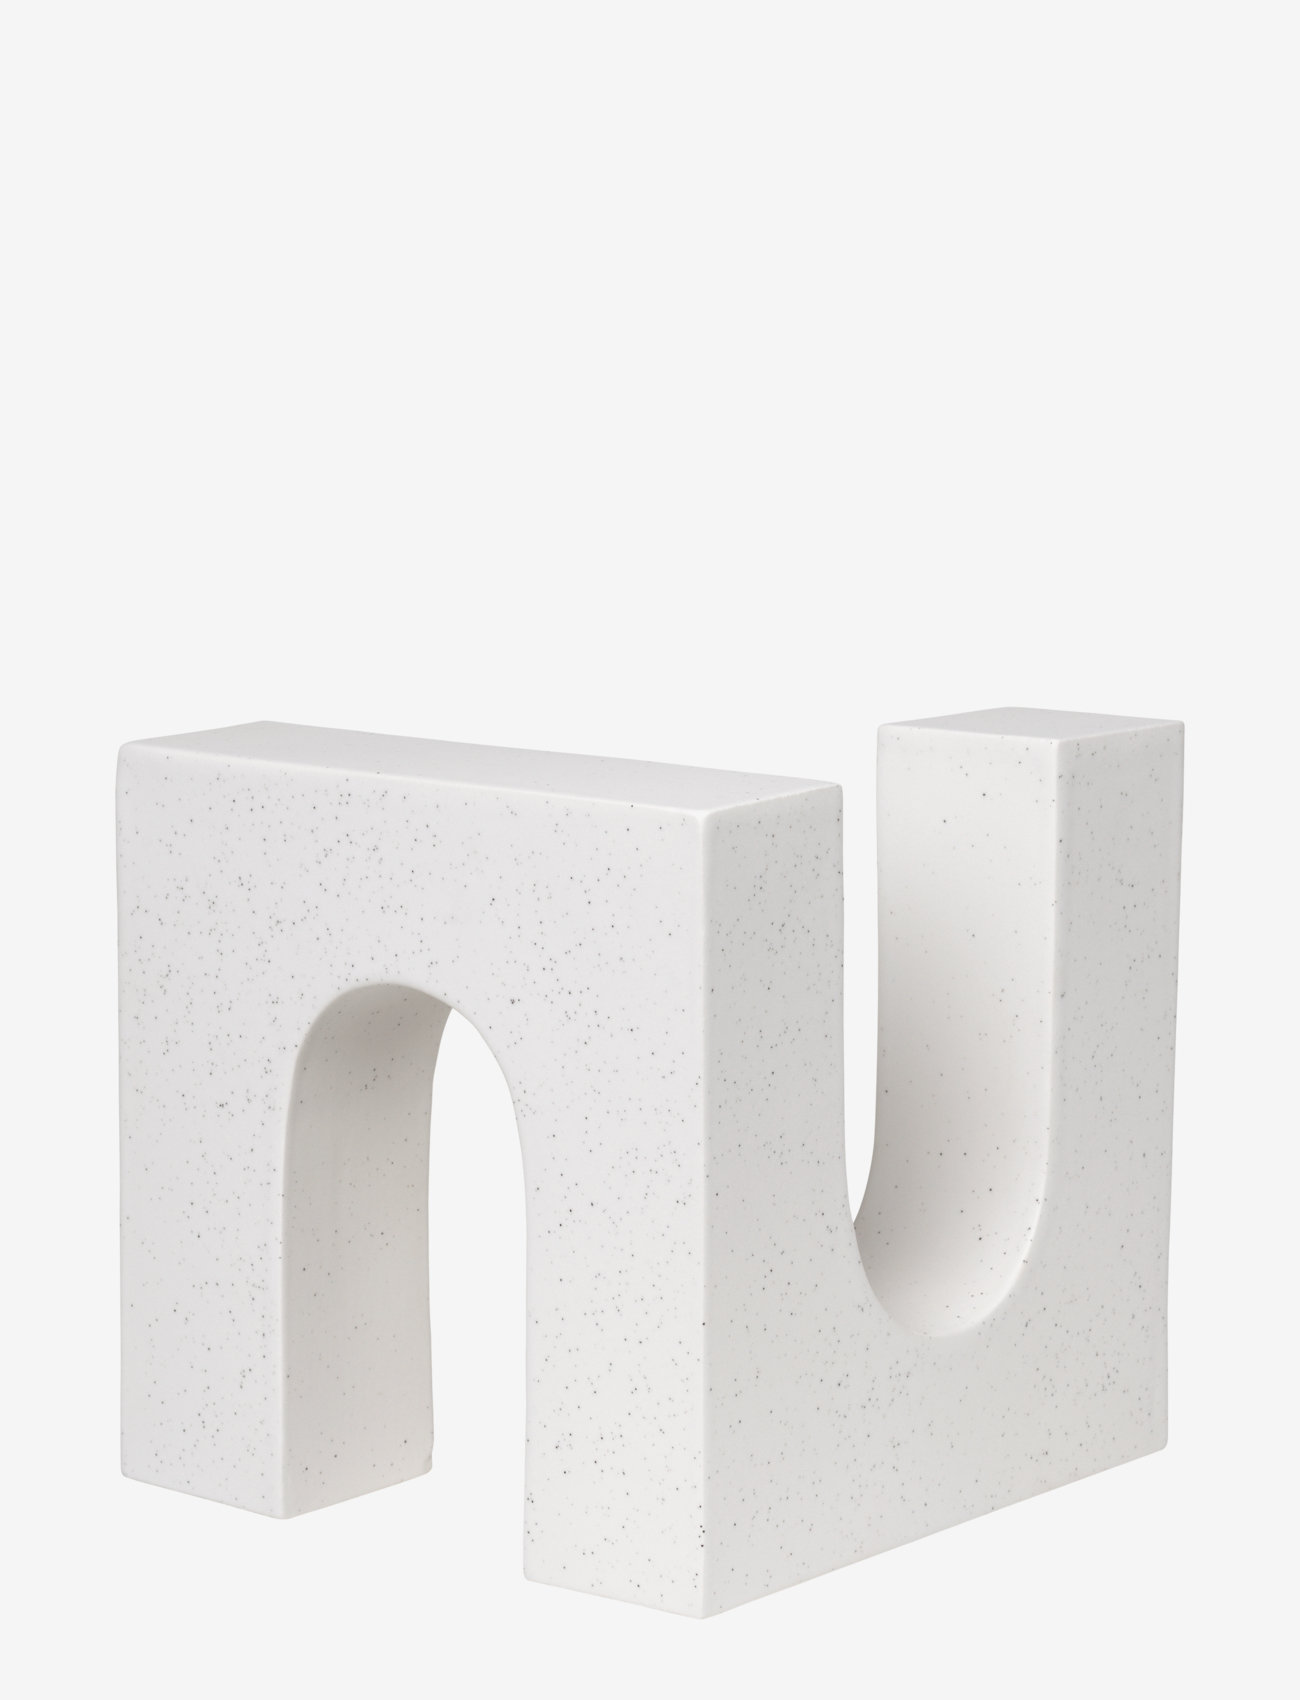 Kristina Dam Studio - Brick Sculpture - porzellanfiguren- & skulpturen - ceramic - 1